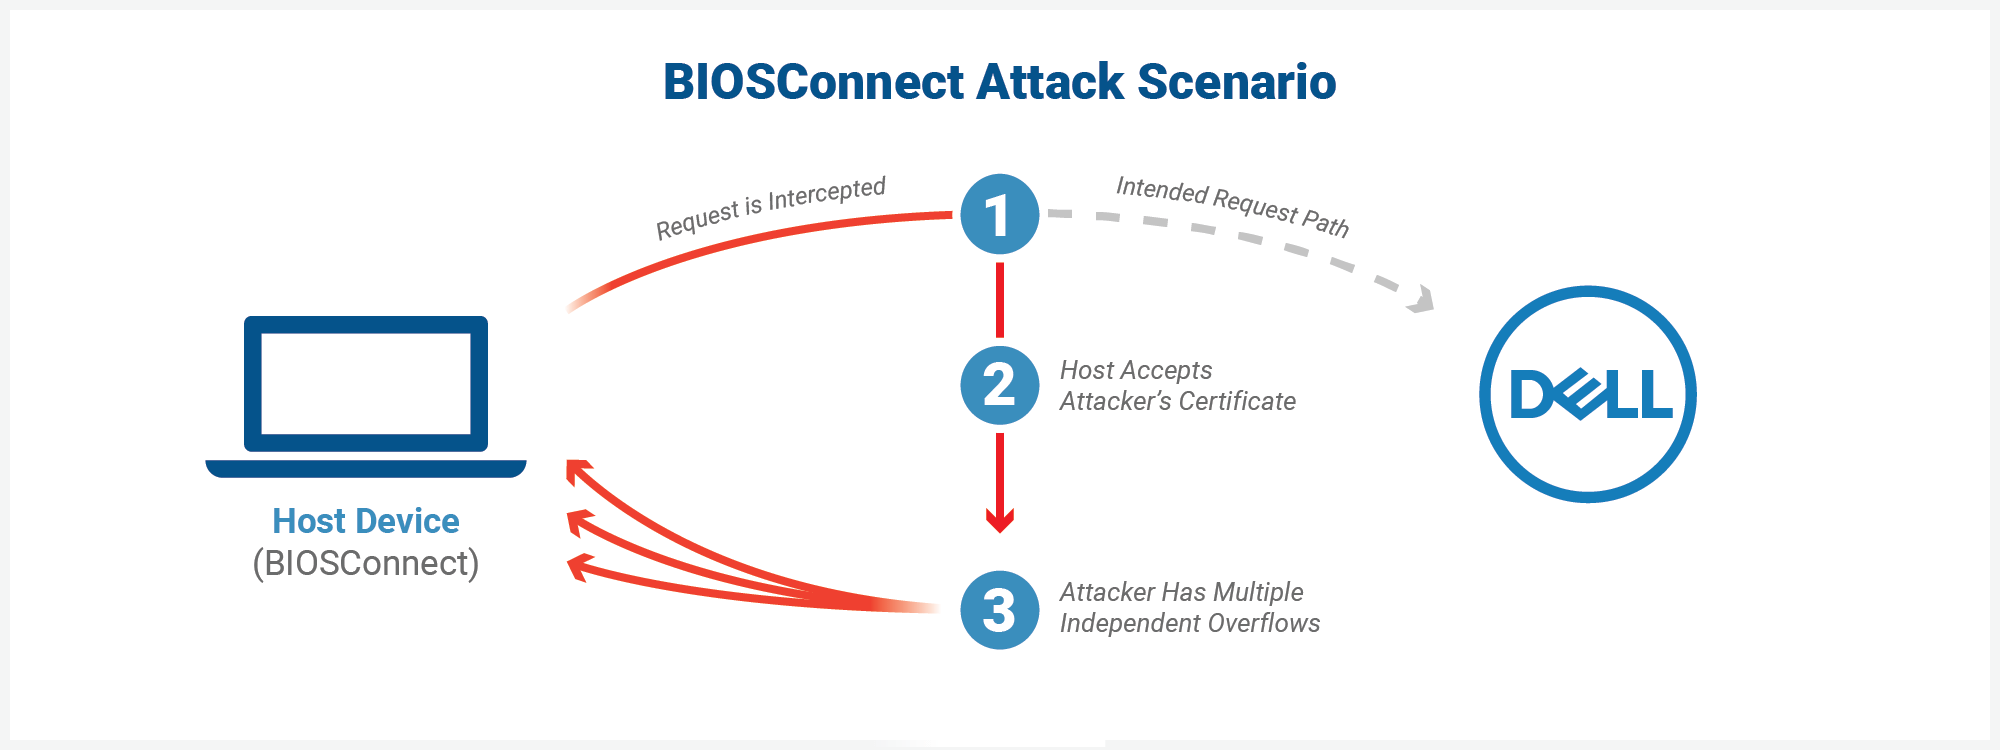 BIOSConnect Attack Scenario Diagram